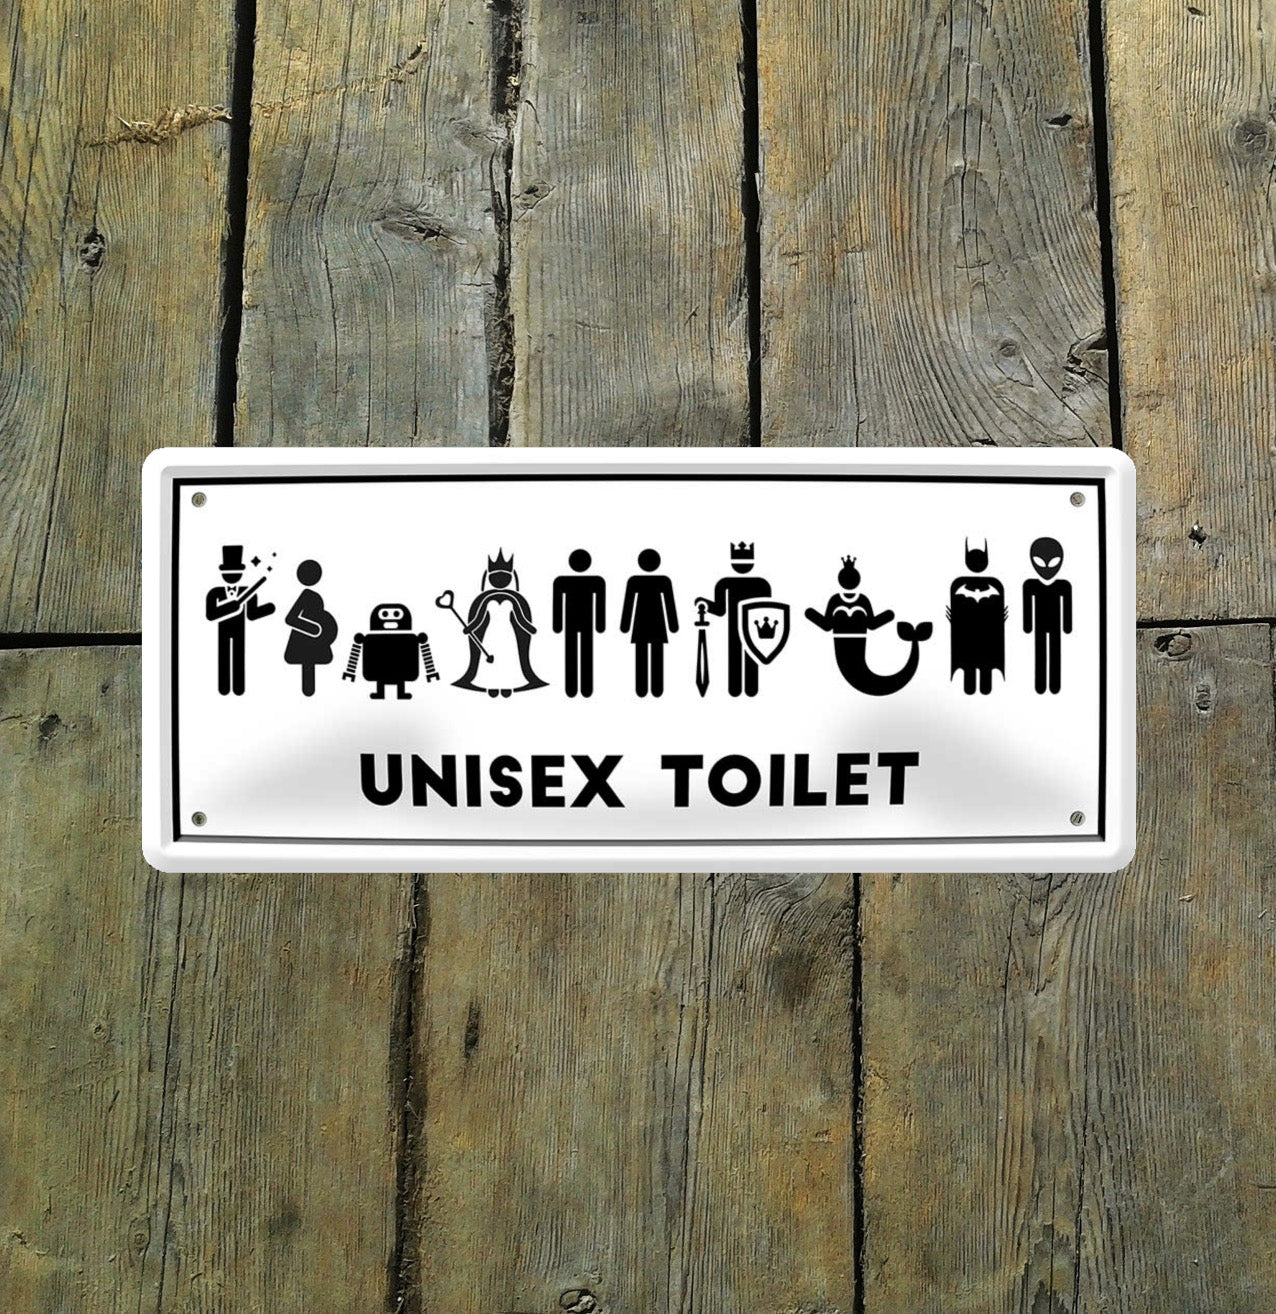 Blechschild ''Unisex Toilet'' 28x12cm